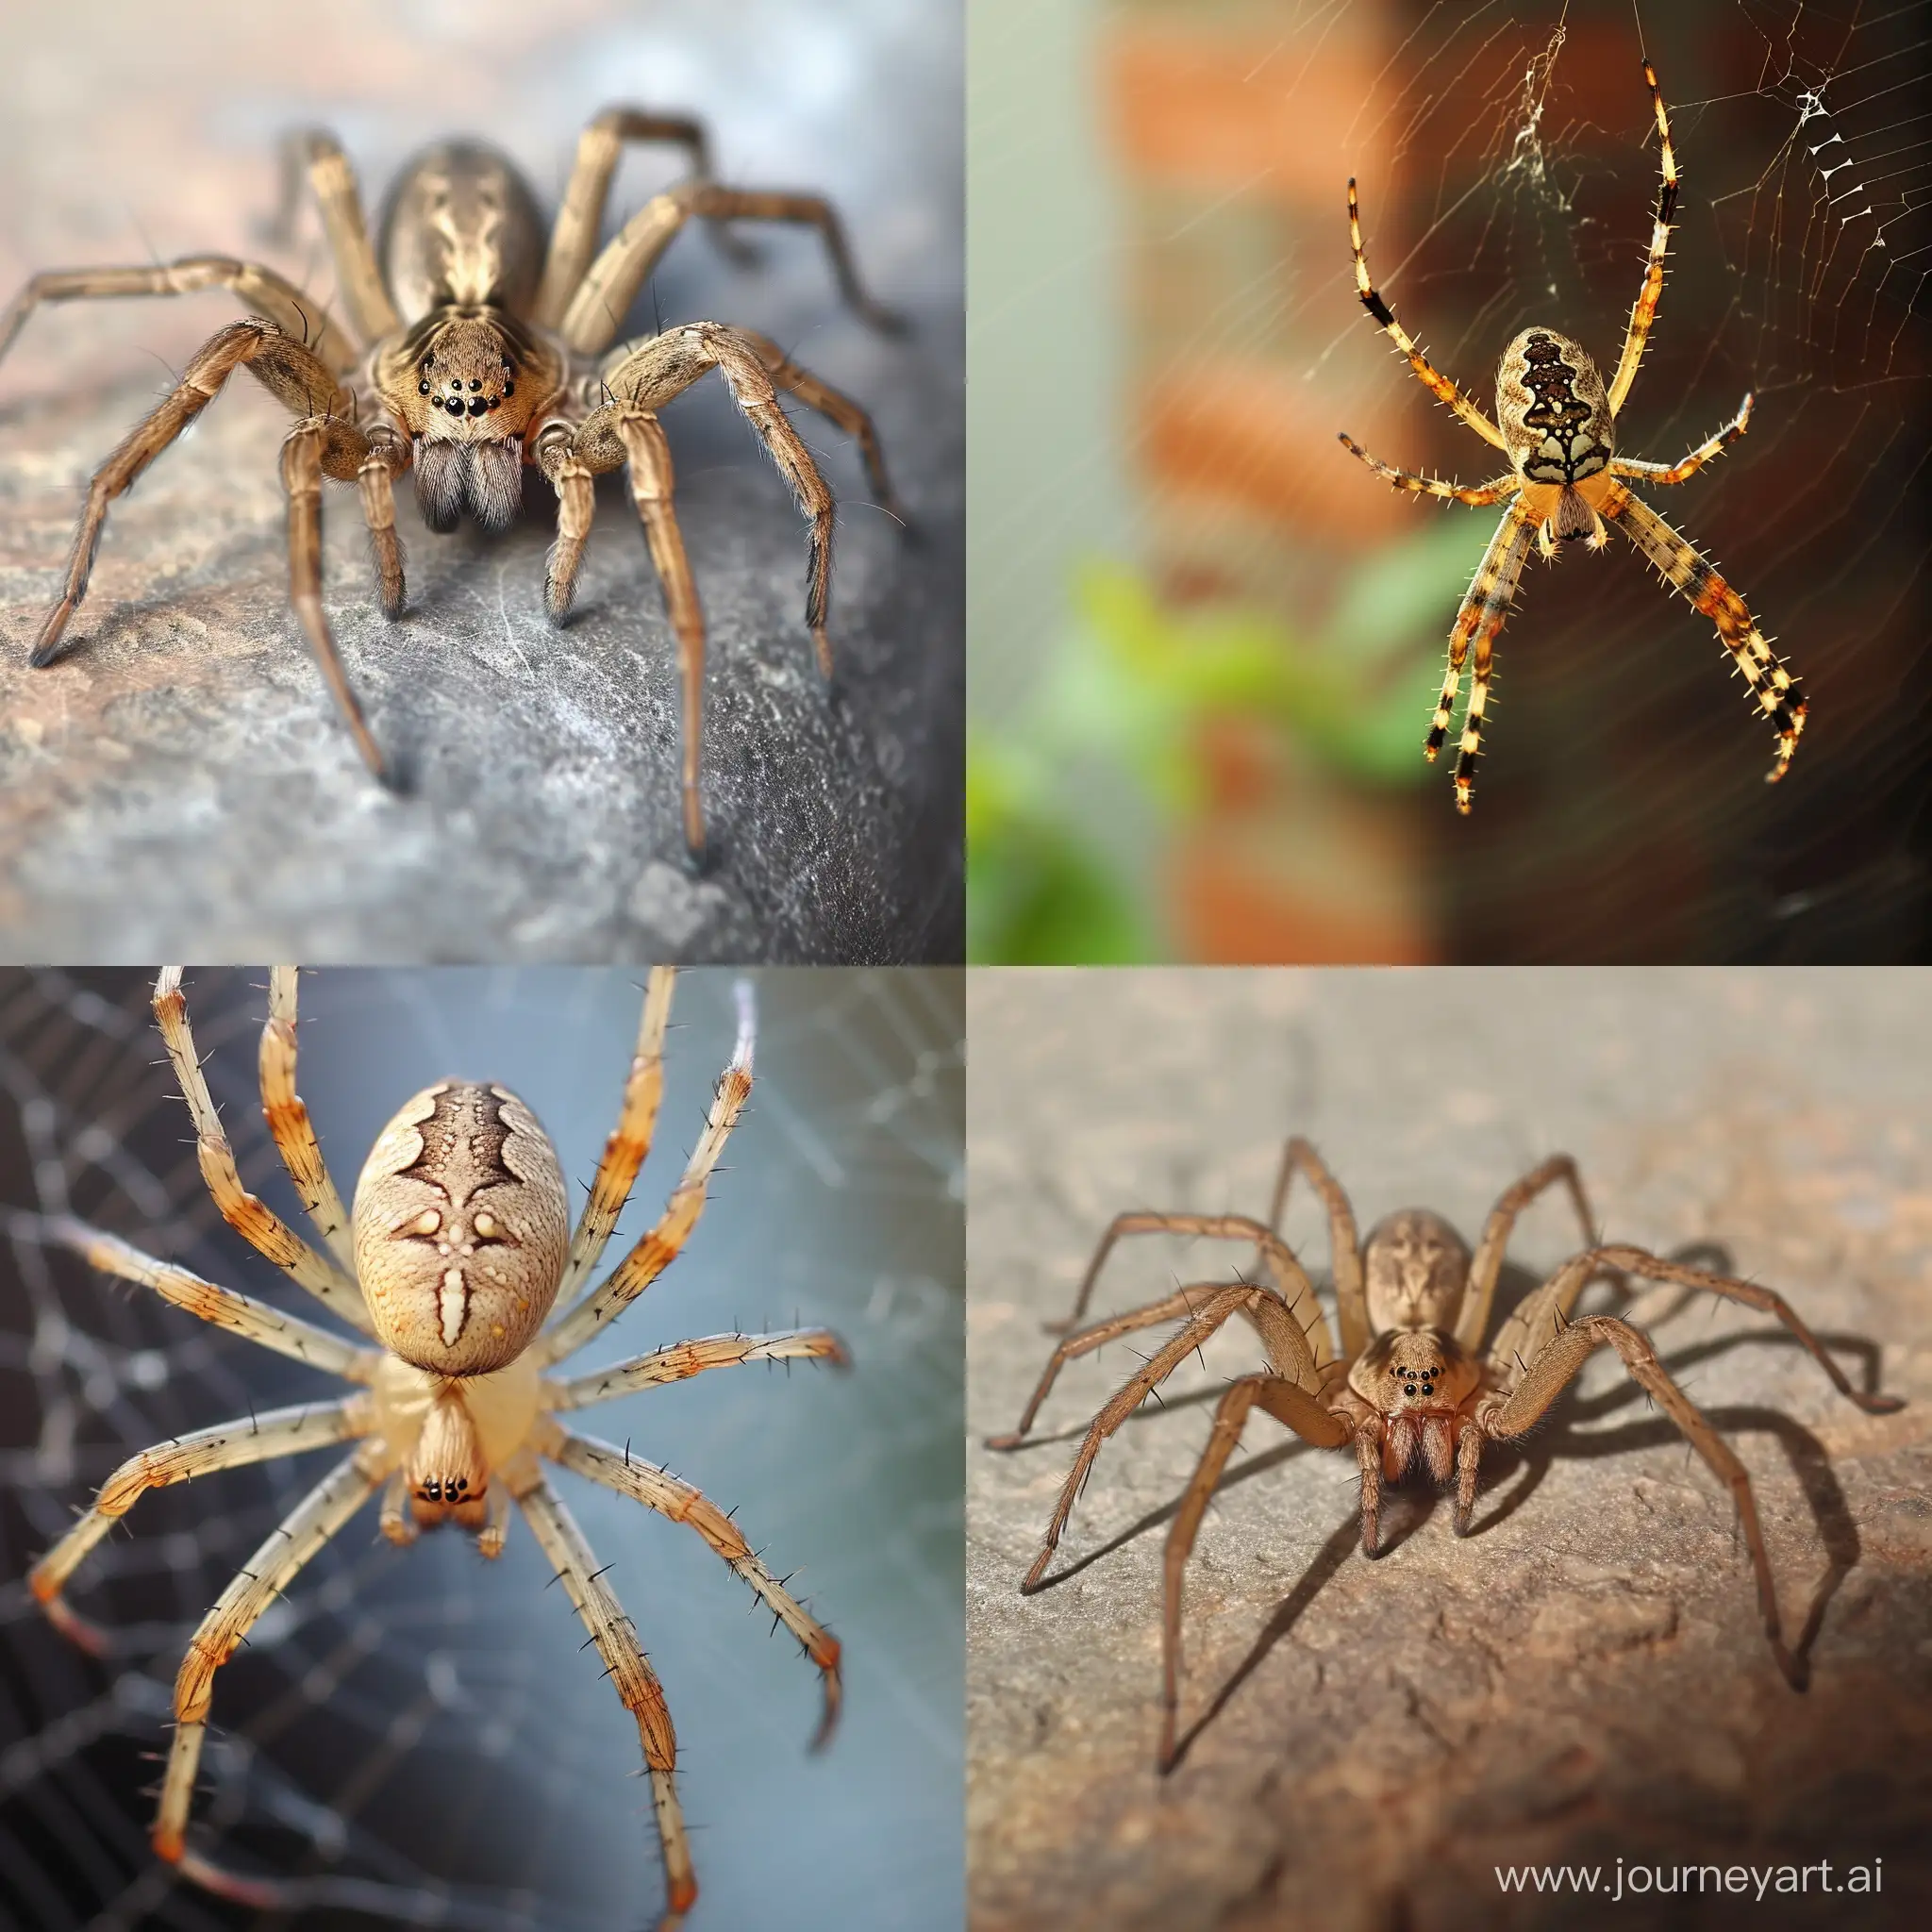 Elegant-Spider-Art-with-Intricate-Details